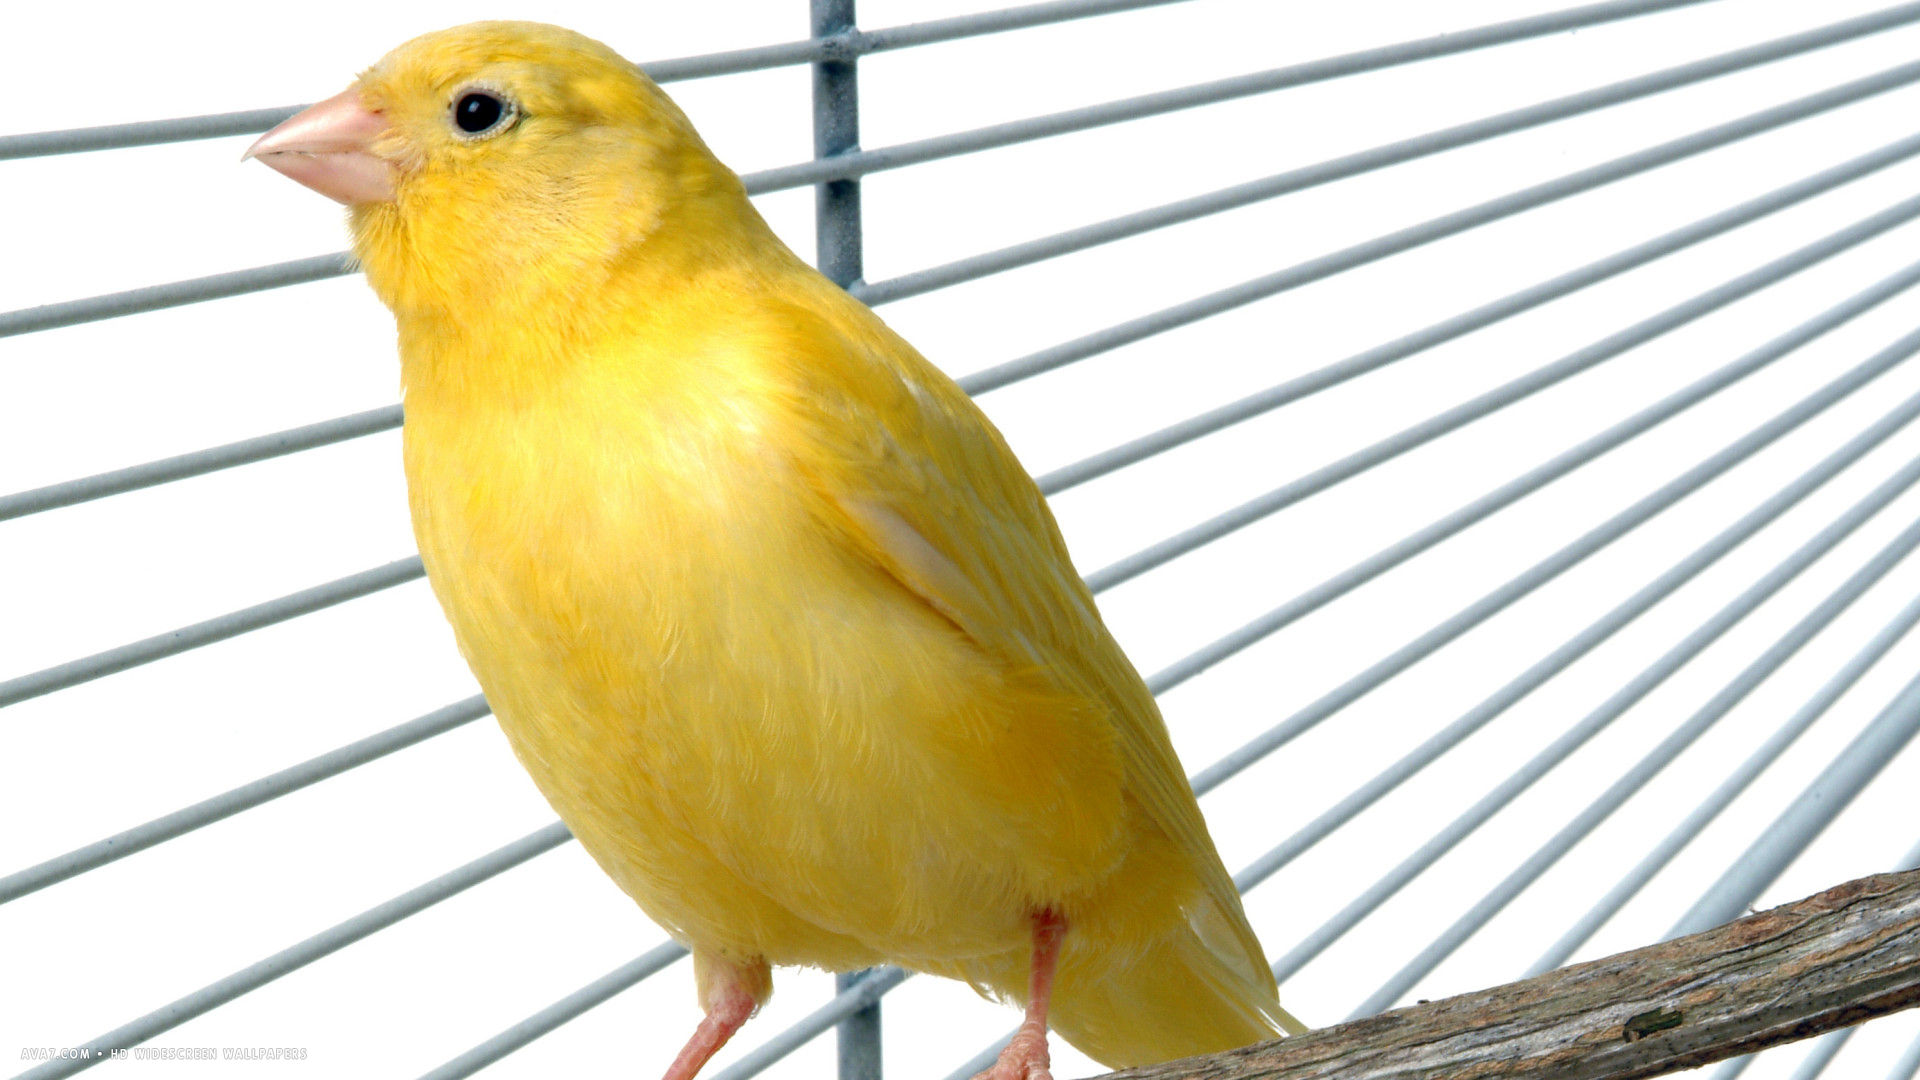 Canary Yellow Cage Pet Bird HD Widescreen Wallpaper Birds